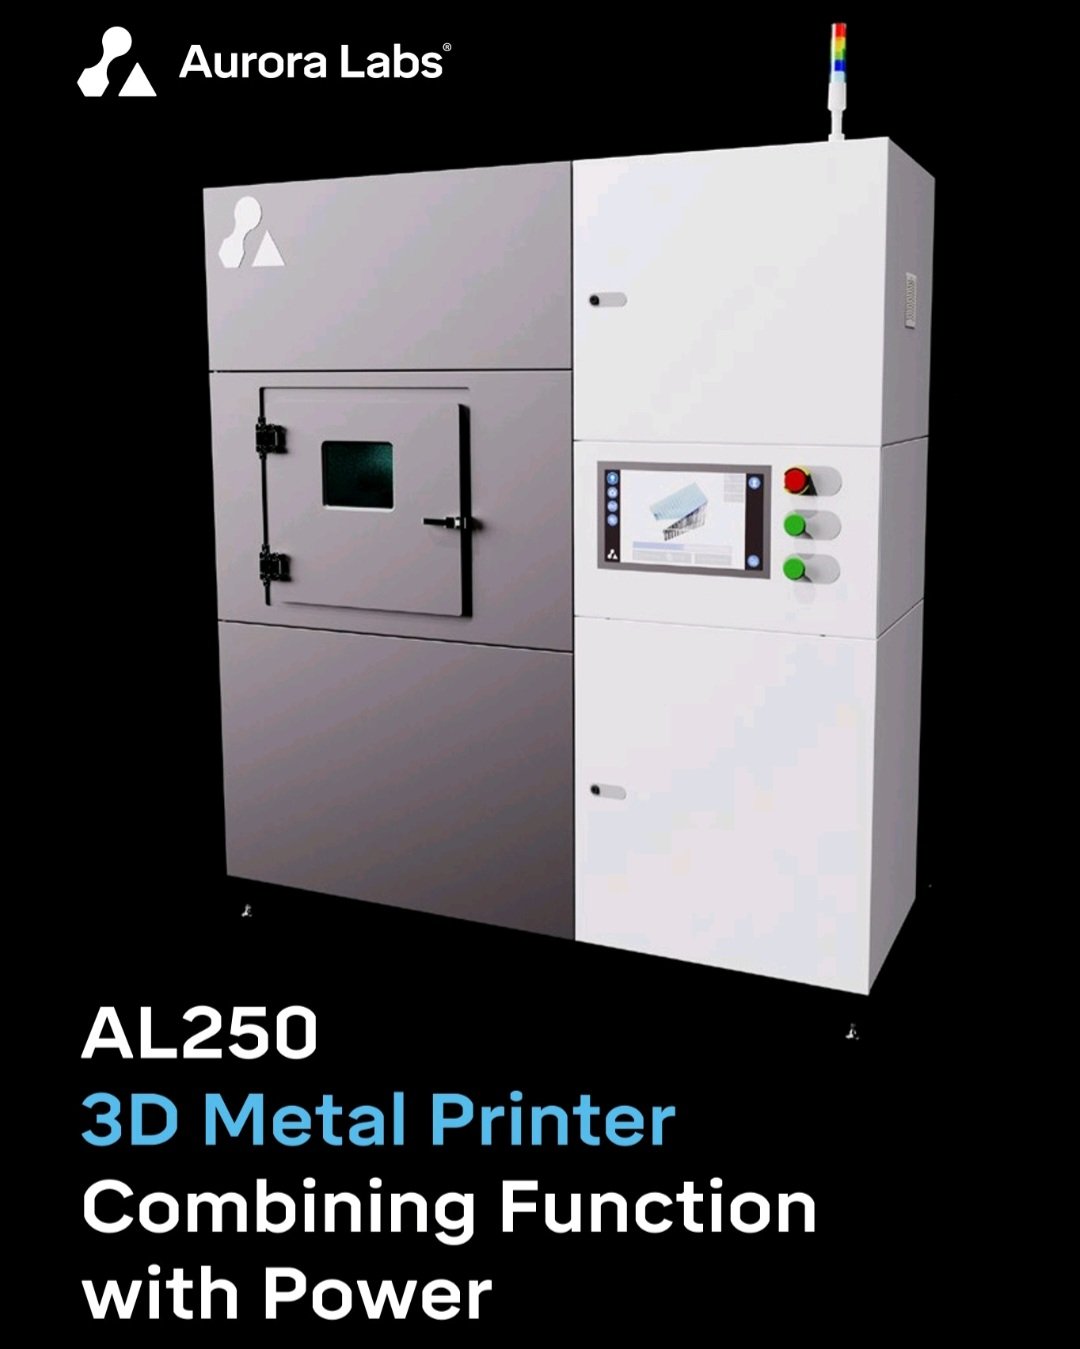 The AL250 metal 3D printer. Photo via Aurora Labs.